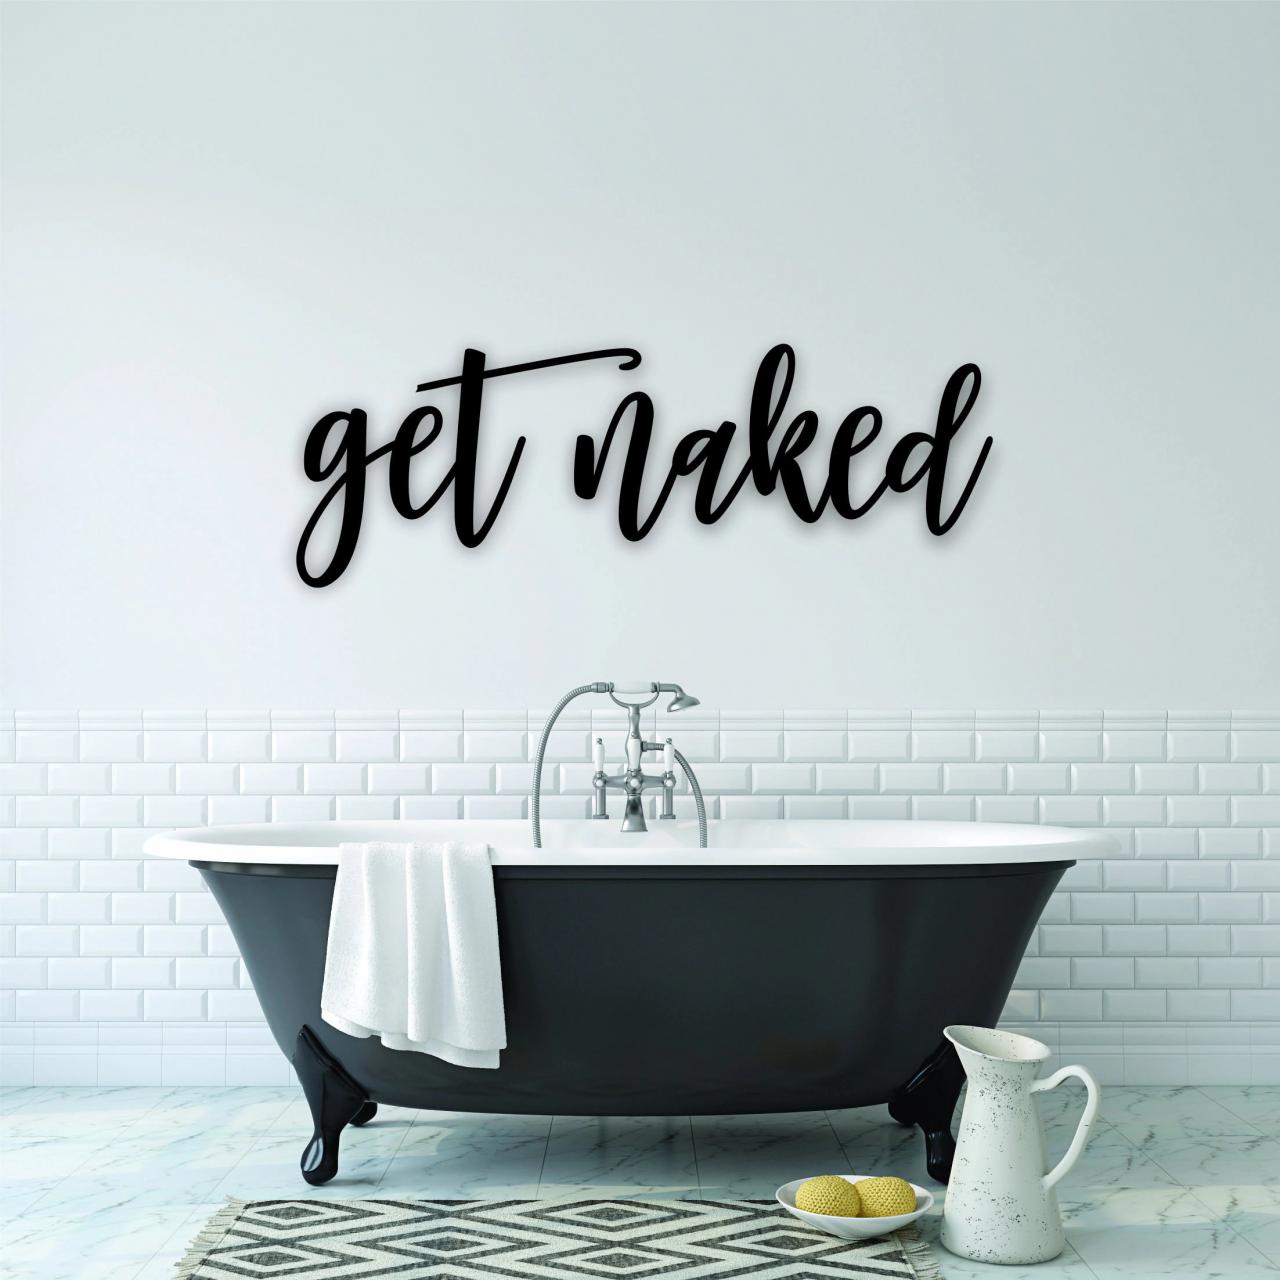 Get Naked Bathroom Signs Bathroom Wall Decor Bathroom Etsy Australia